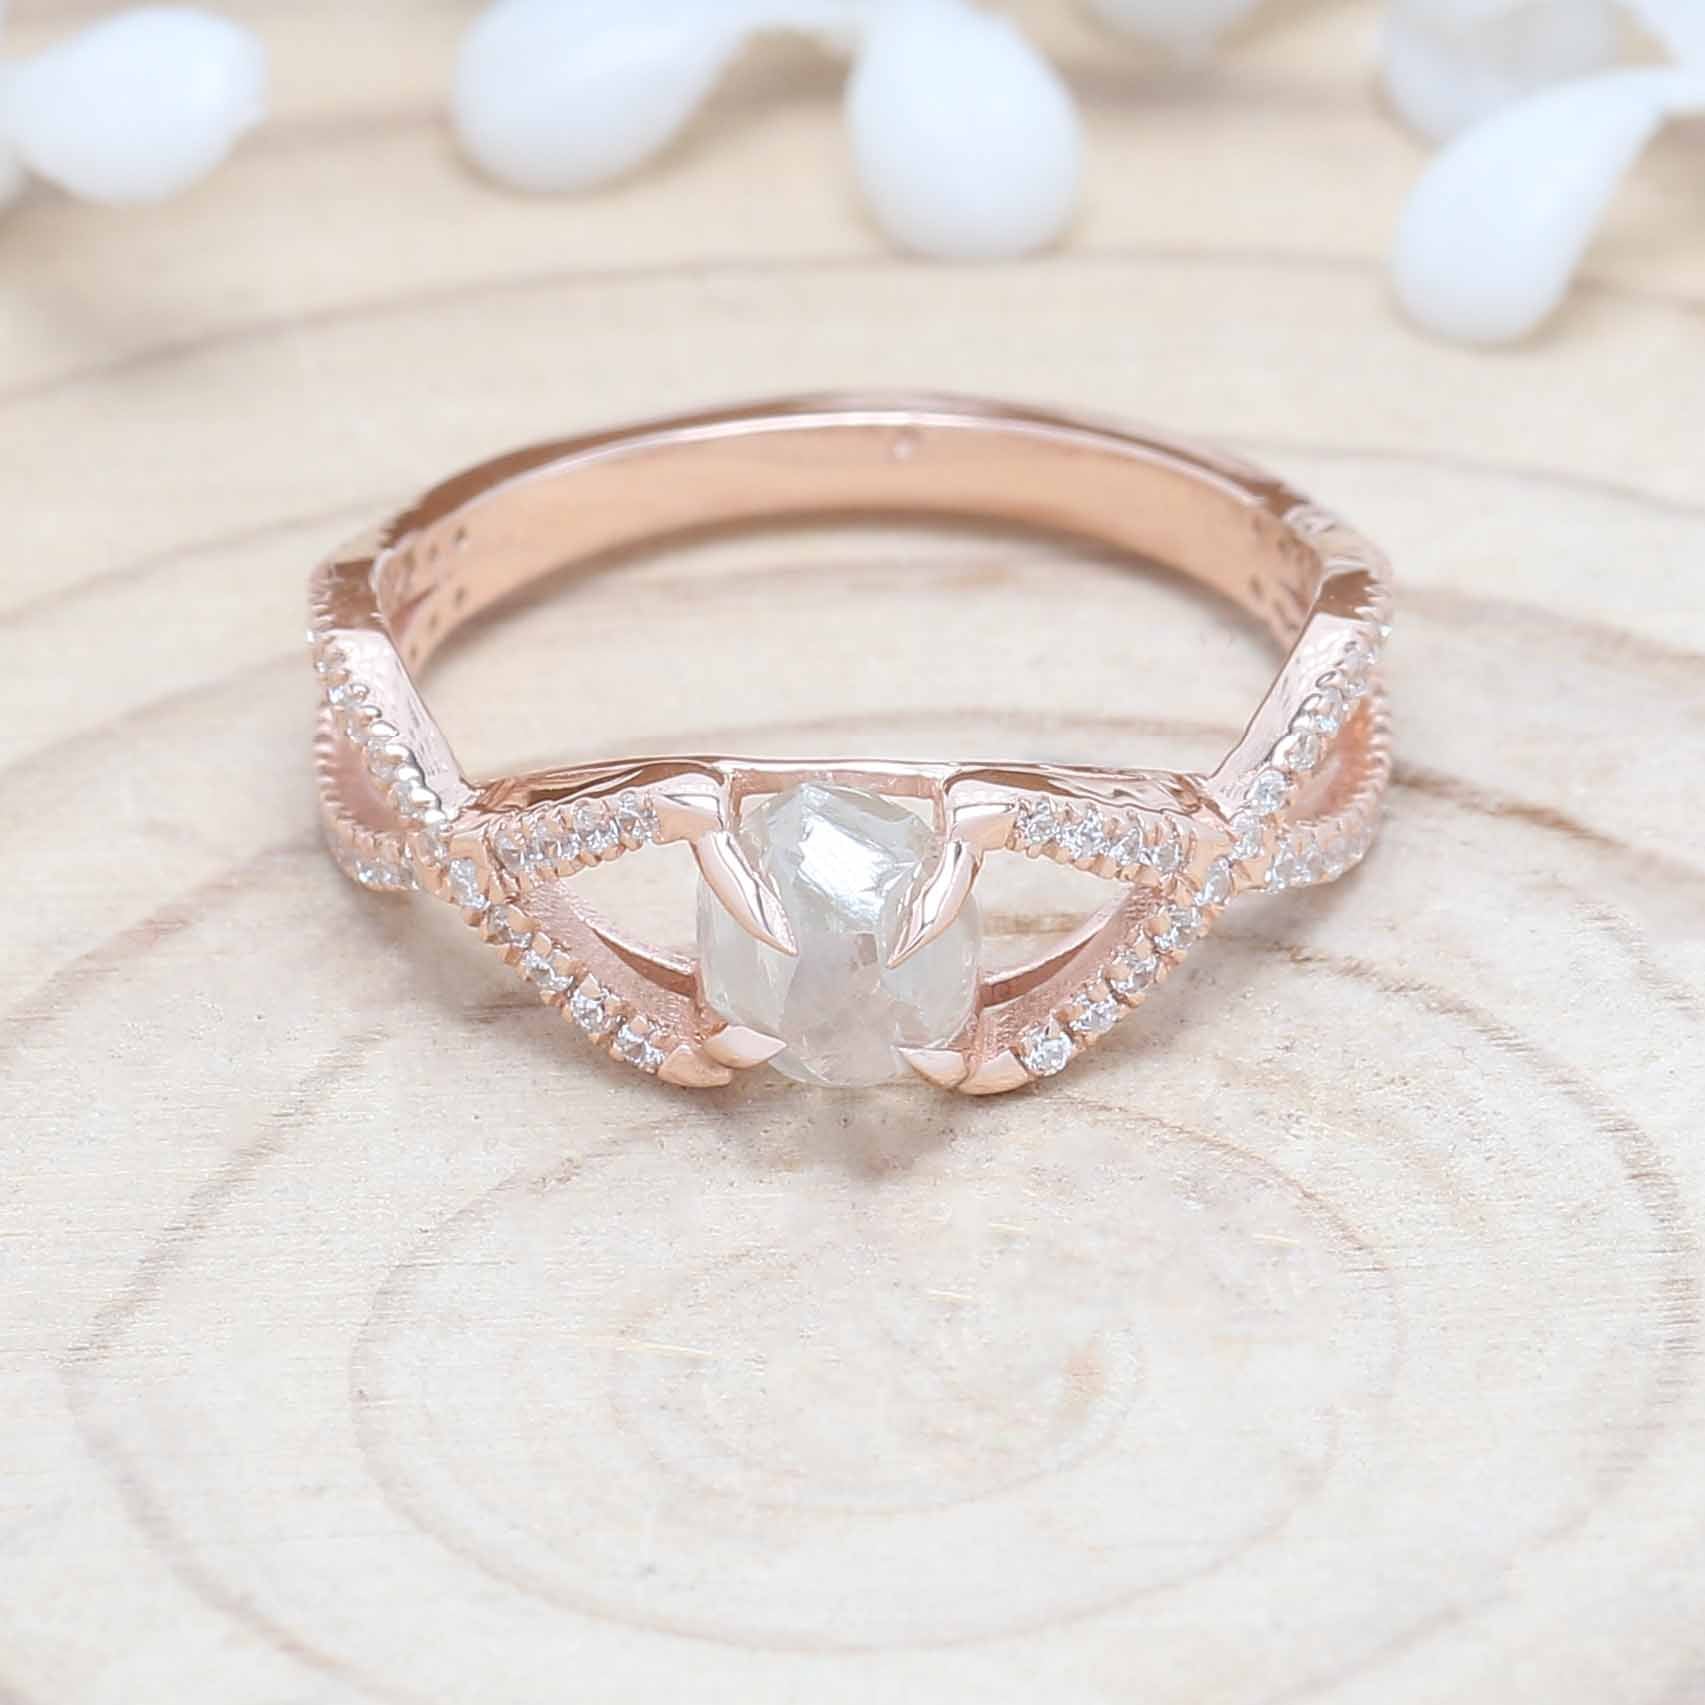 White Rough Diamond 14K Solid Rose White Yellow Gold Ring Engagement Wedding Gift Ring KD877